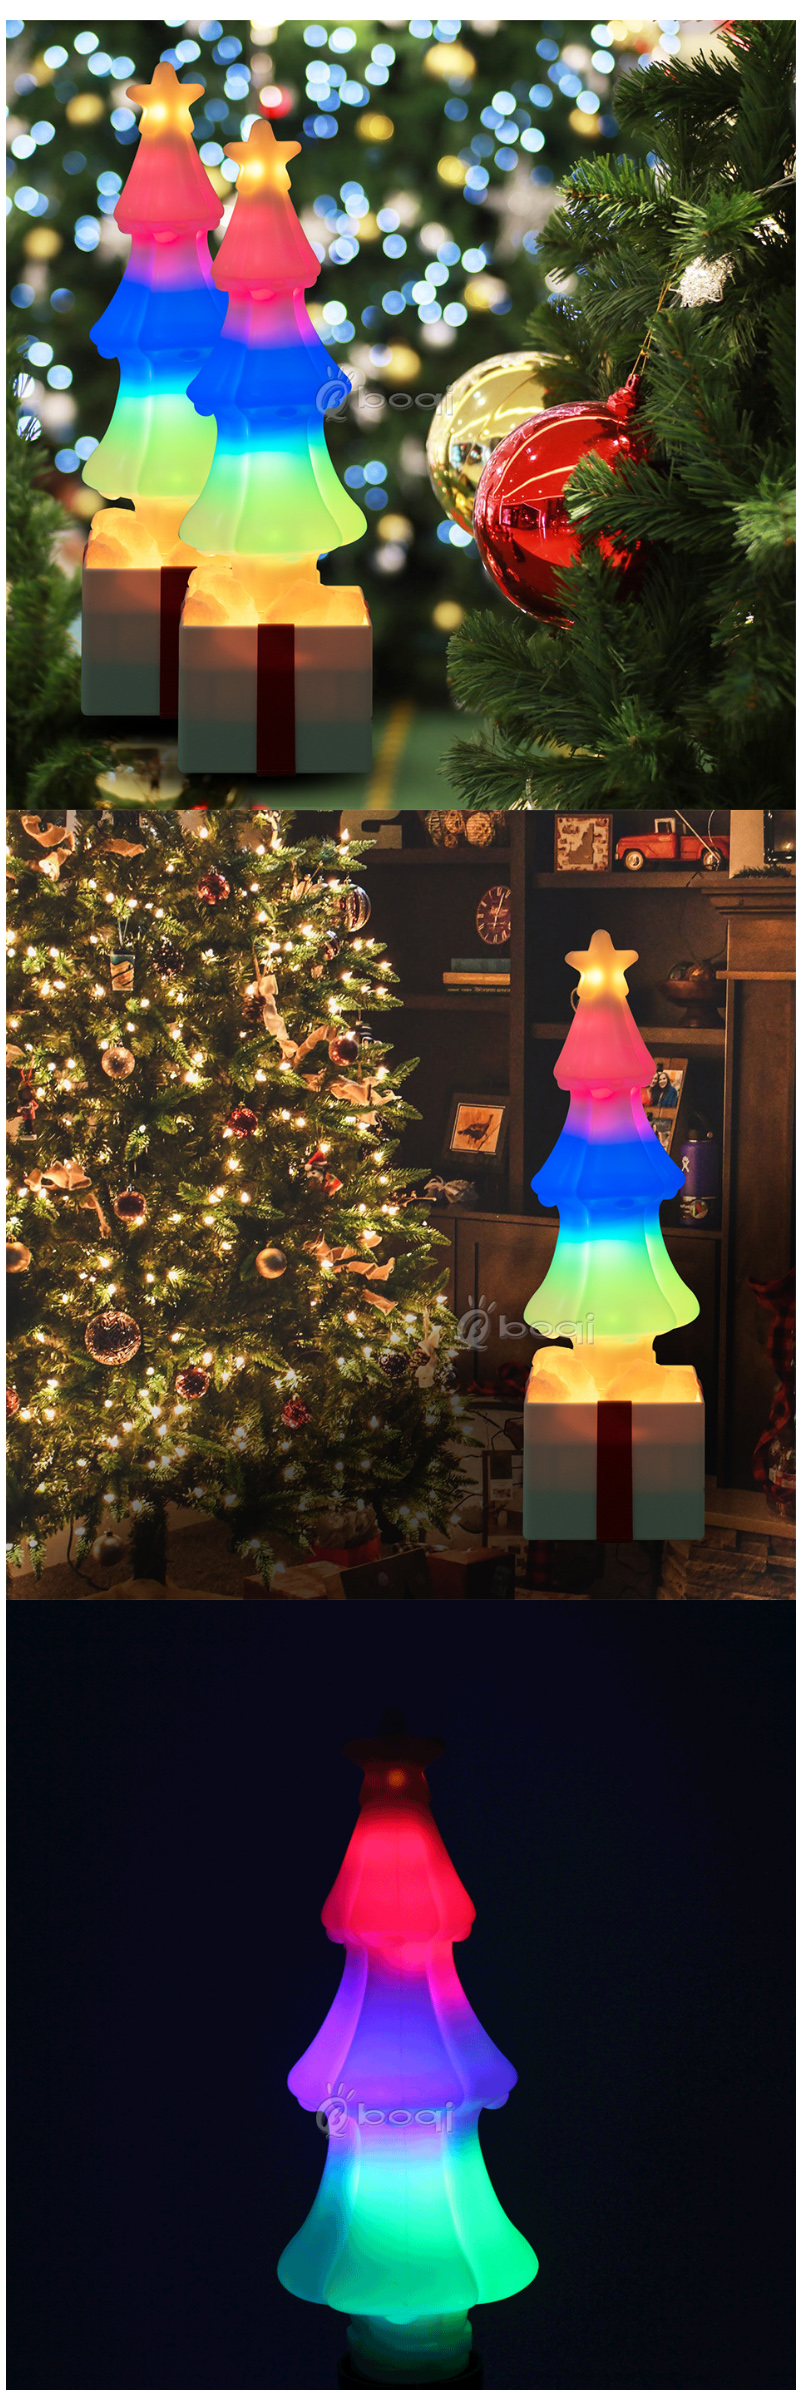 boqi LED Christmas Tree Flame Bulb Atmosphere Light Colored Flame Crystal Rock Lamp Night Light Holiday Lighting